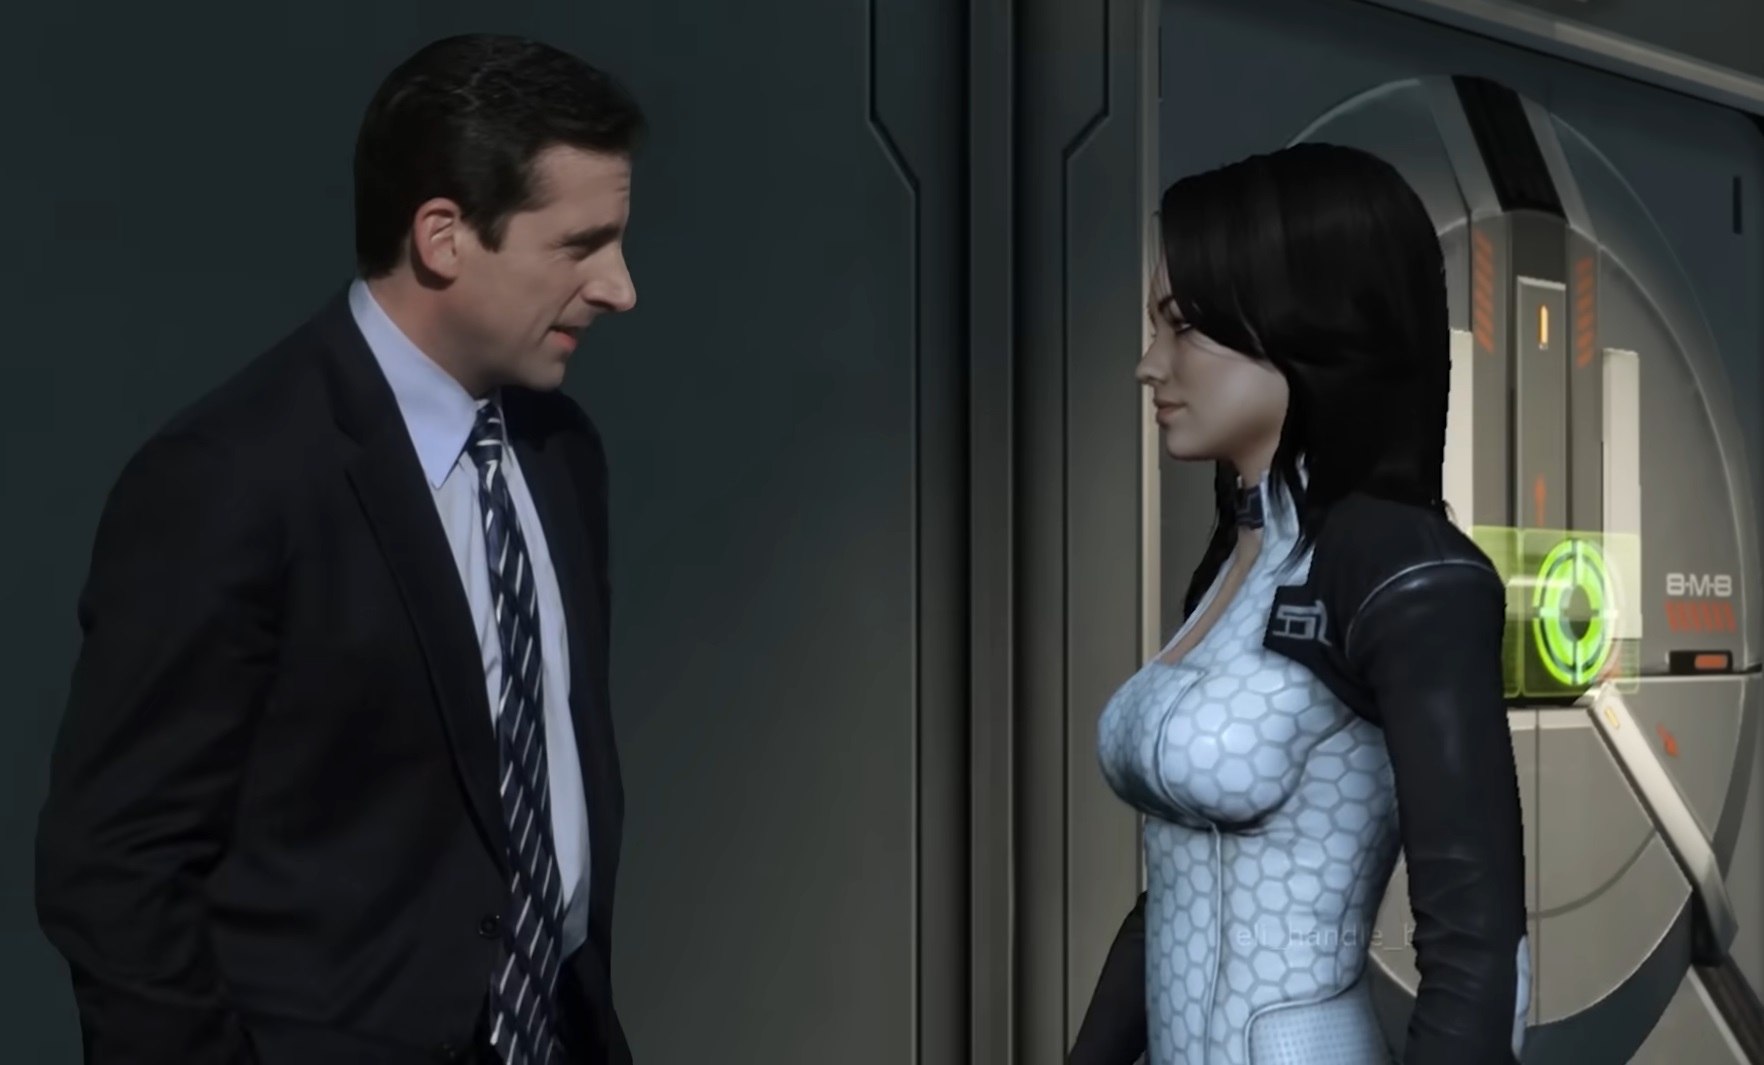 Michael Scott de The Office en Mass Effect es perfecto